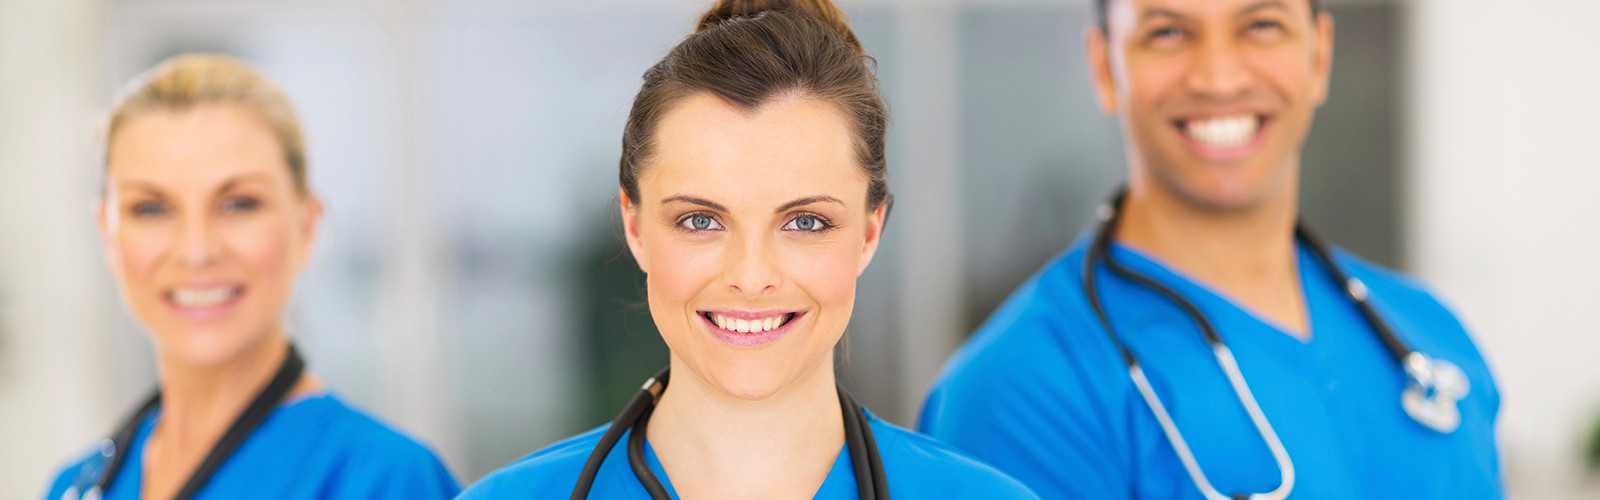 Medical Assistant Careers Nursing Career Opportunities